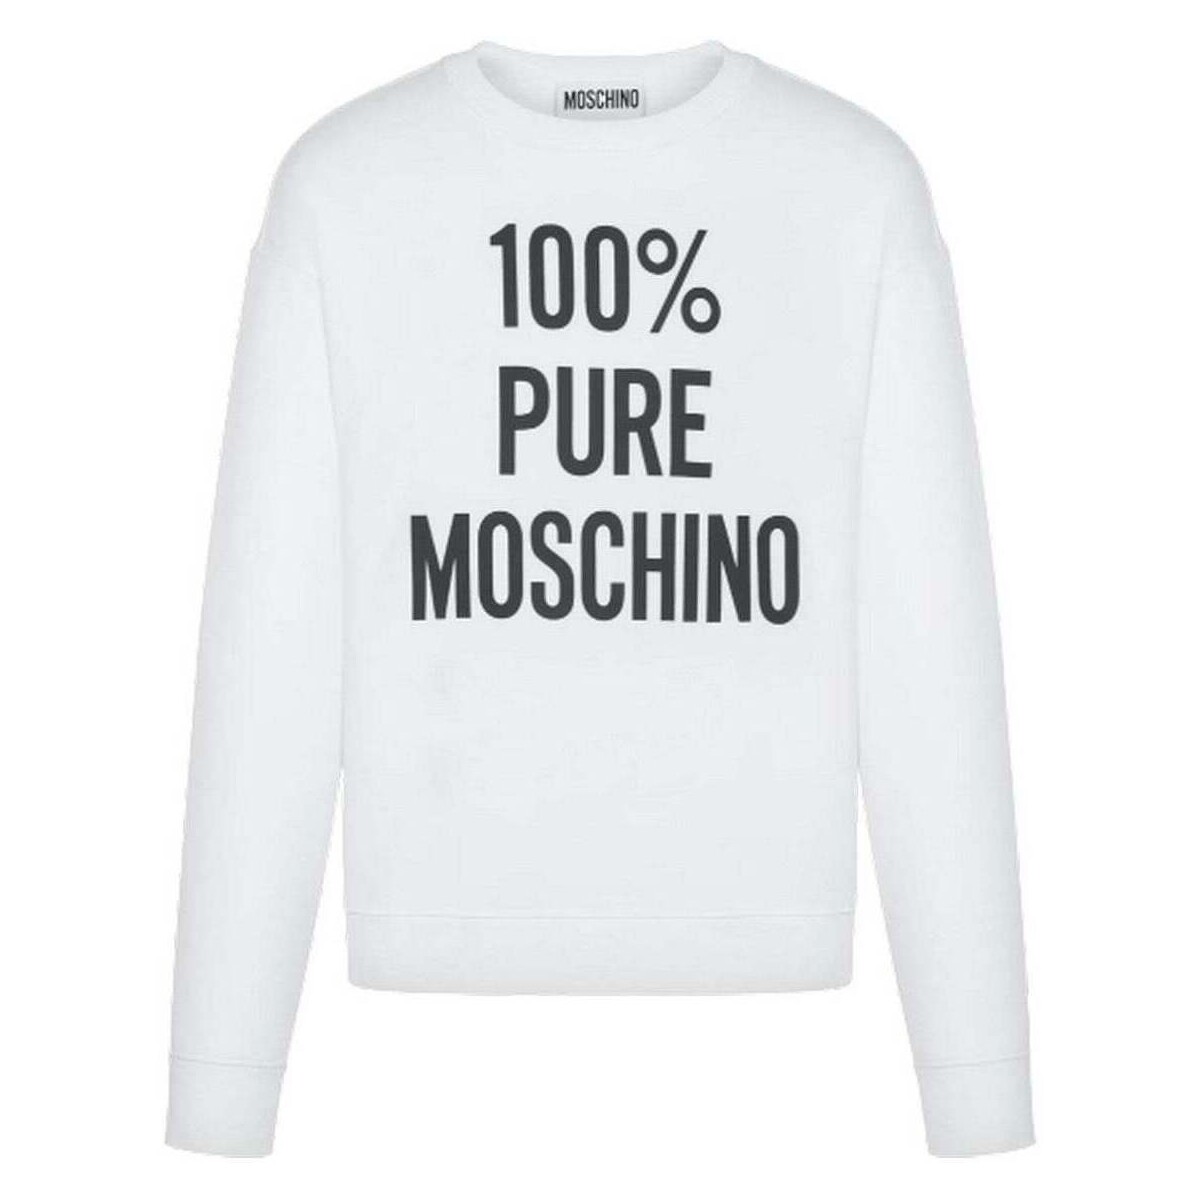 Vêtements Homme Sweats Moschino  Blanc